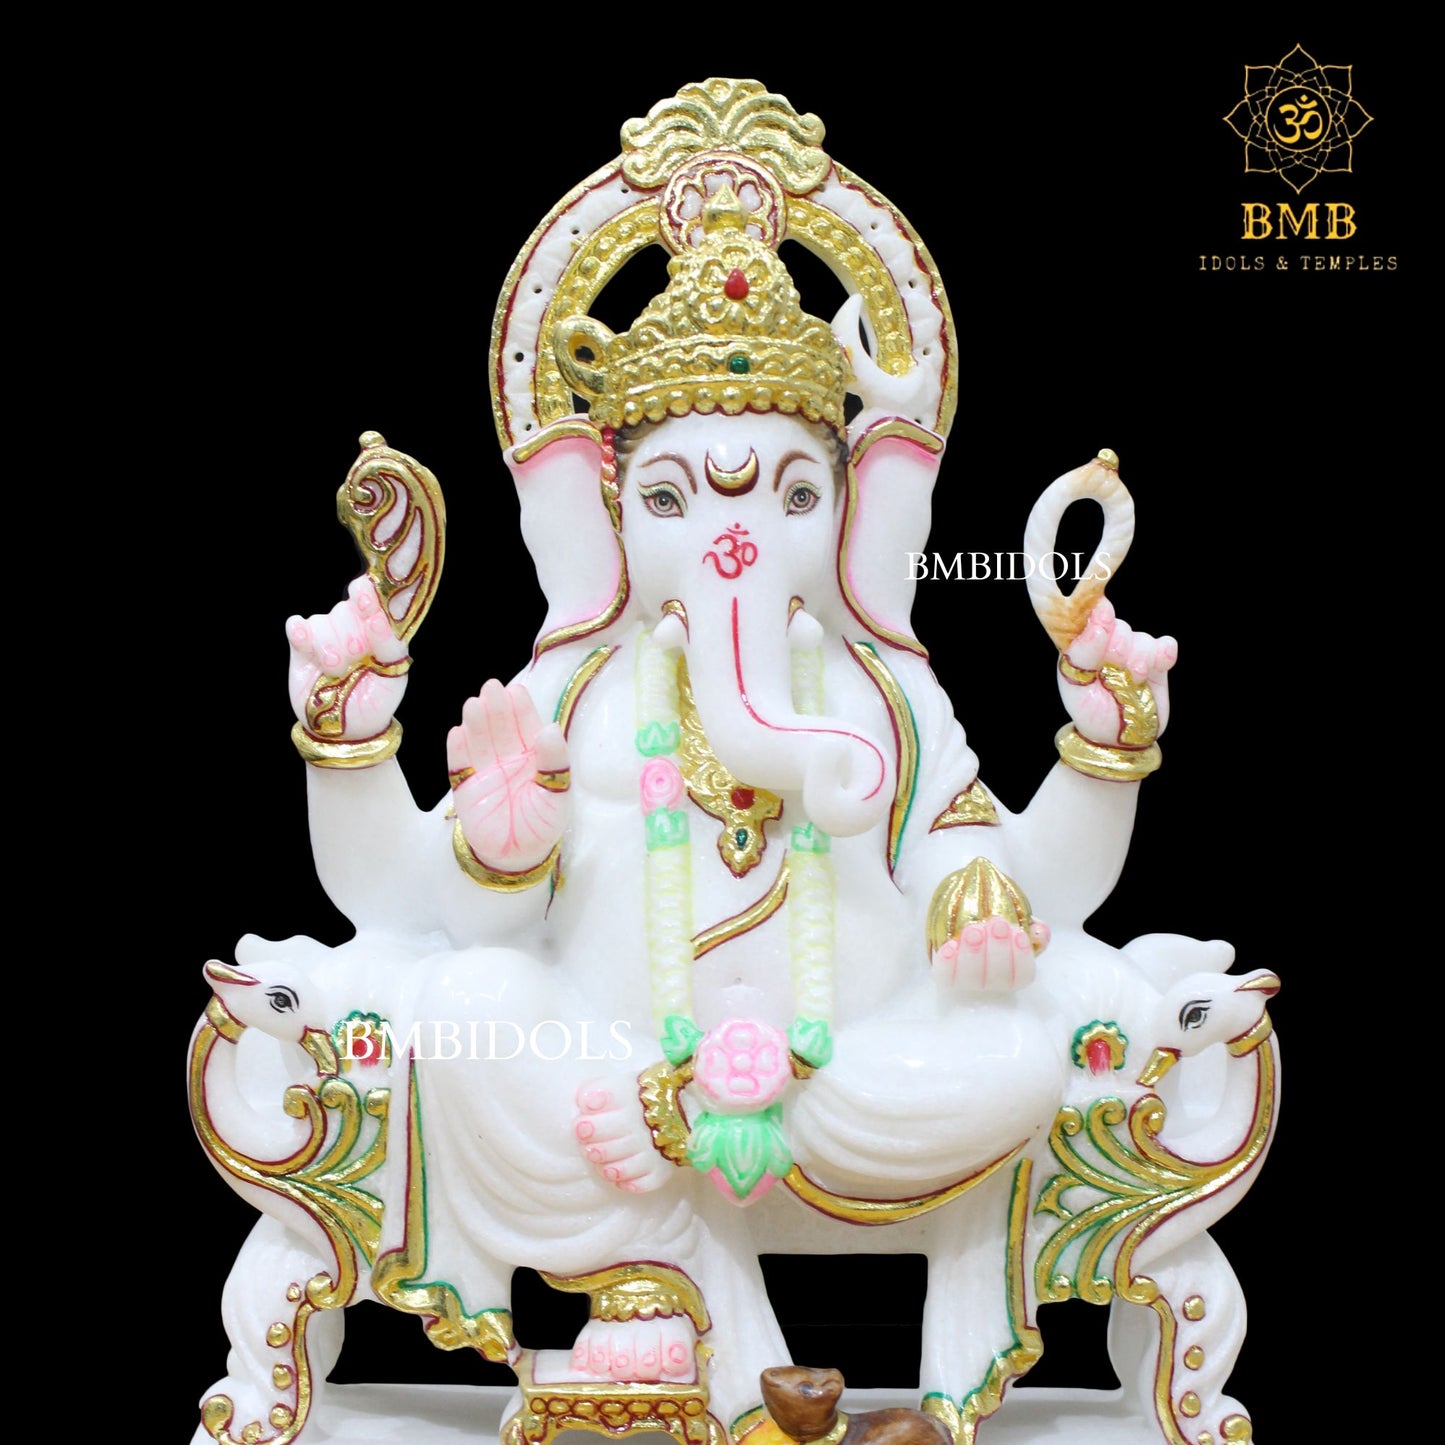 White Marble Ganesh Statue in ashirwad posture in 12inch